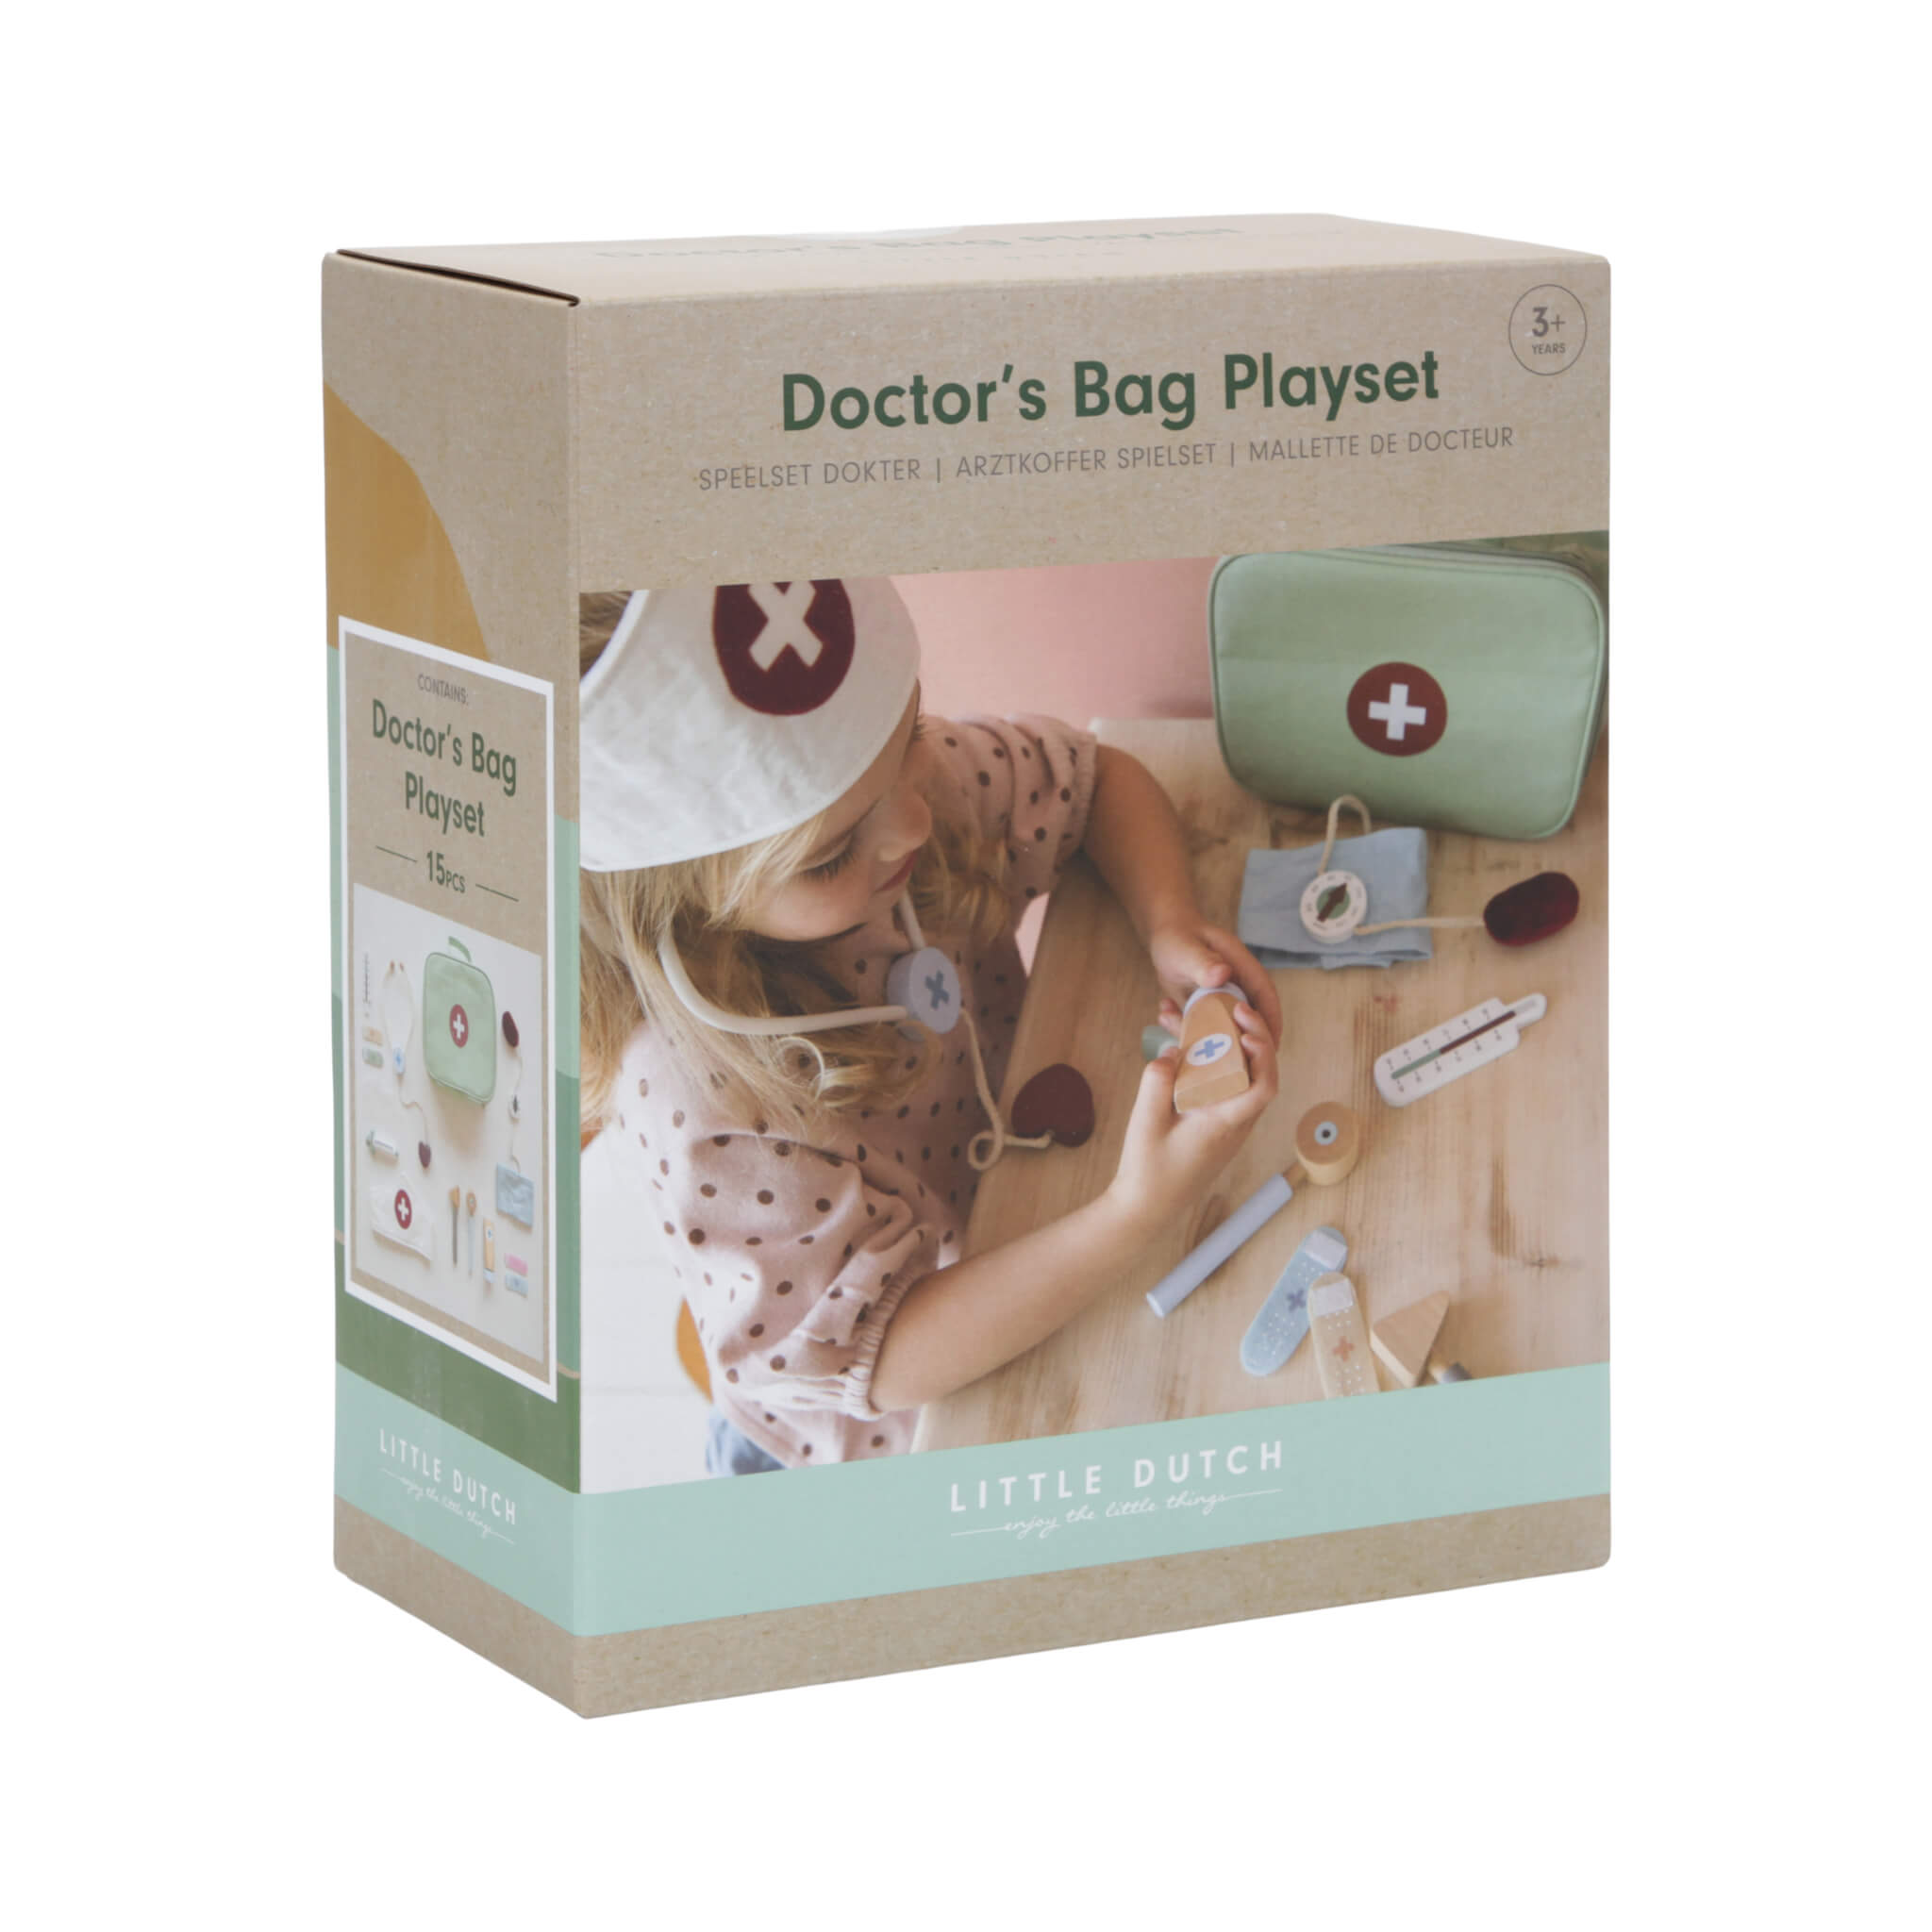 Little Dutch Doctors Bag Playset Packaging